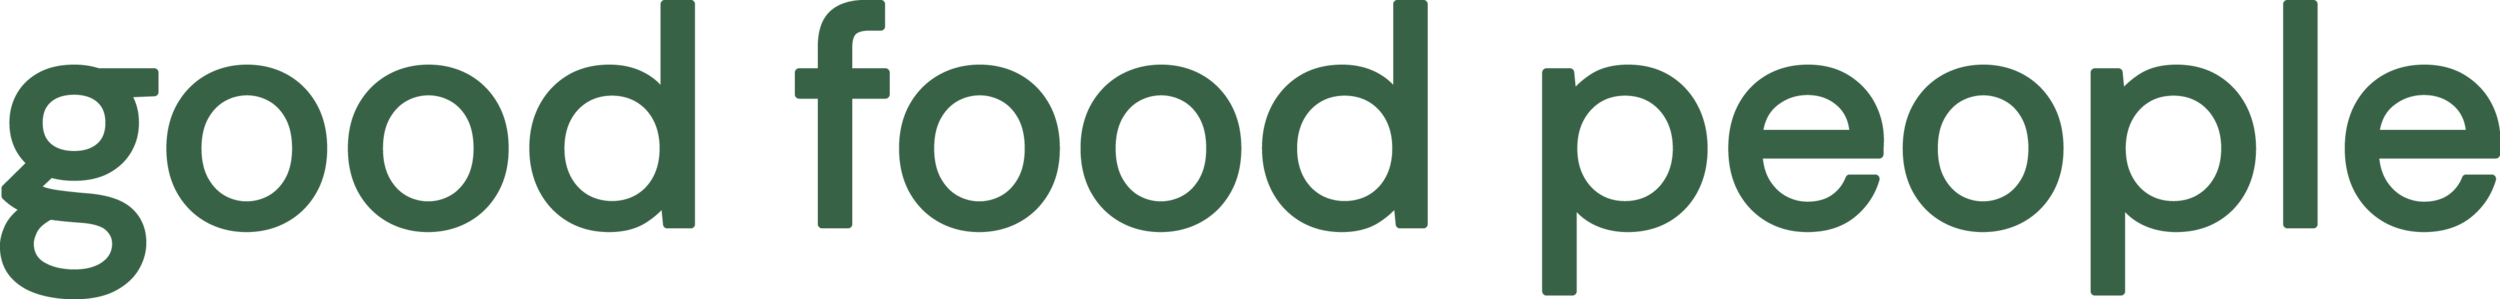 saladstop-logo-green.png